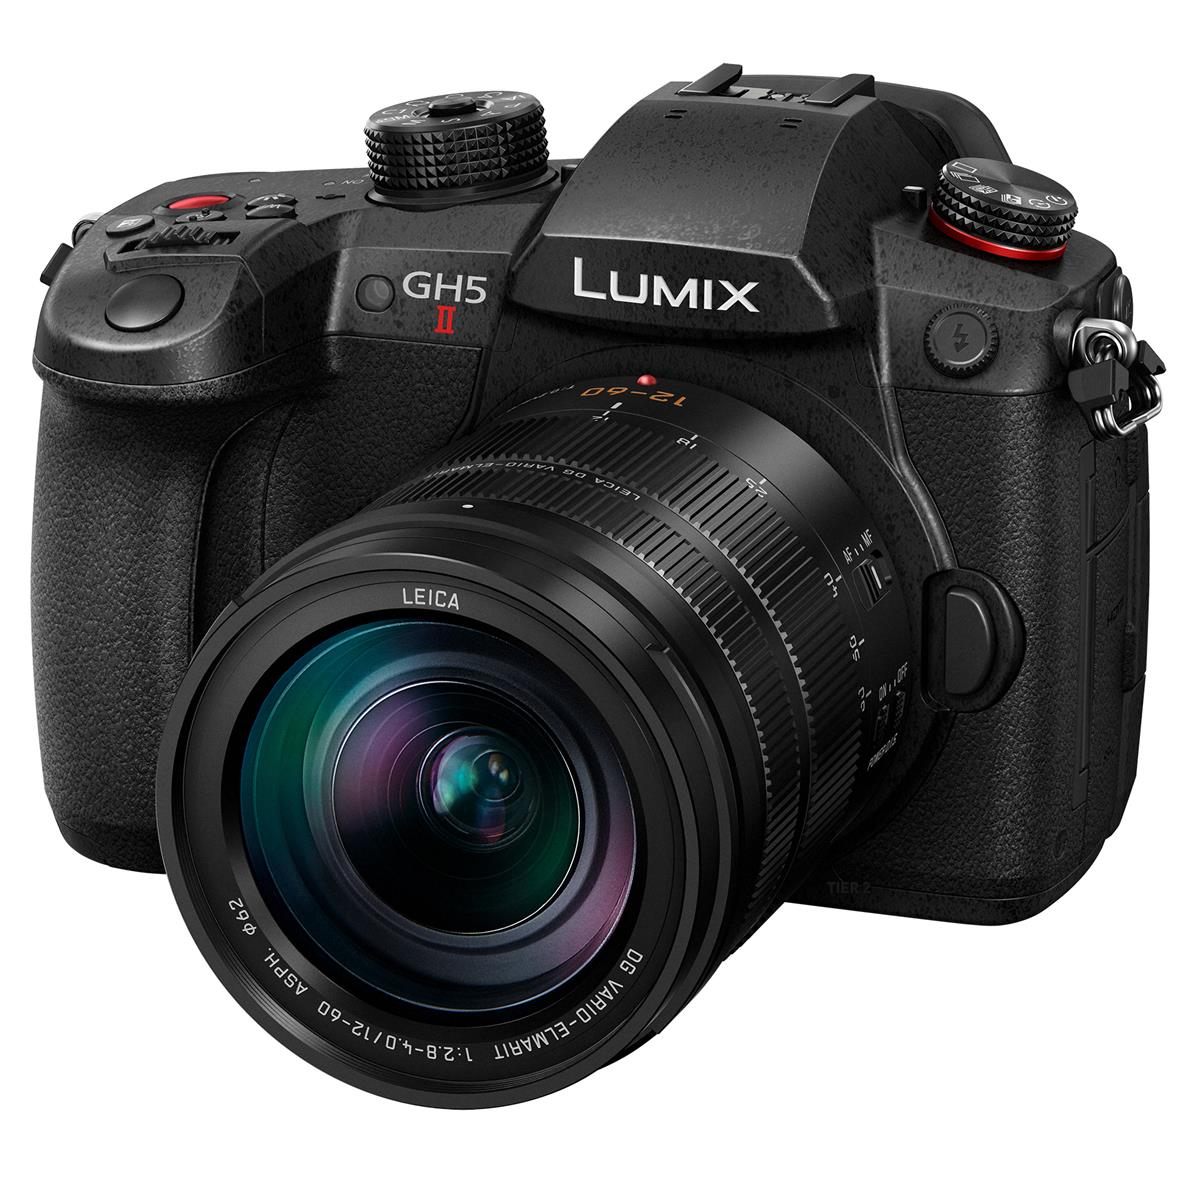 Image of Panasonic LUMIX GH5 II Camera with Leica 12-60mm f/2.8-4.0 Lens